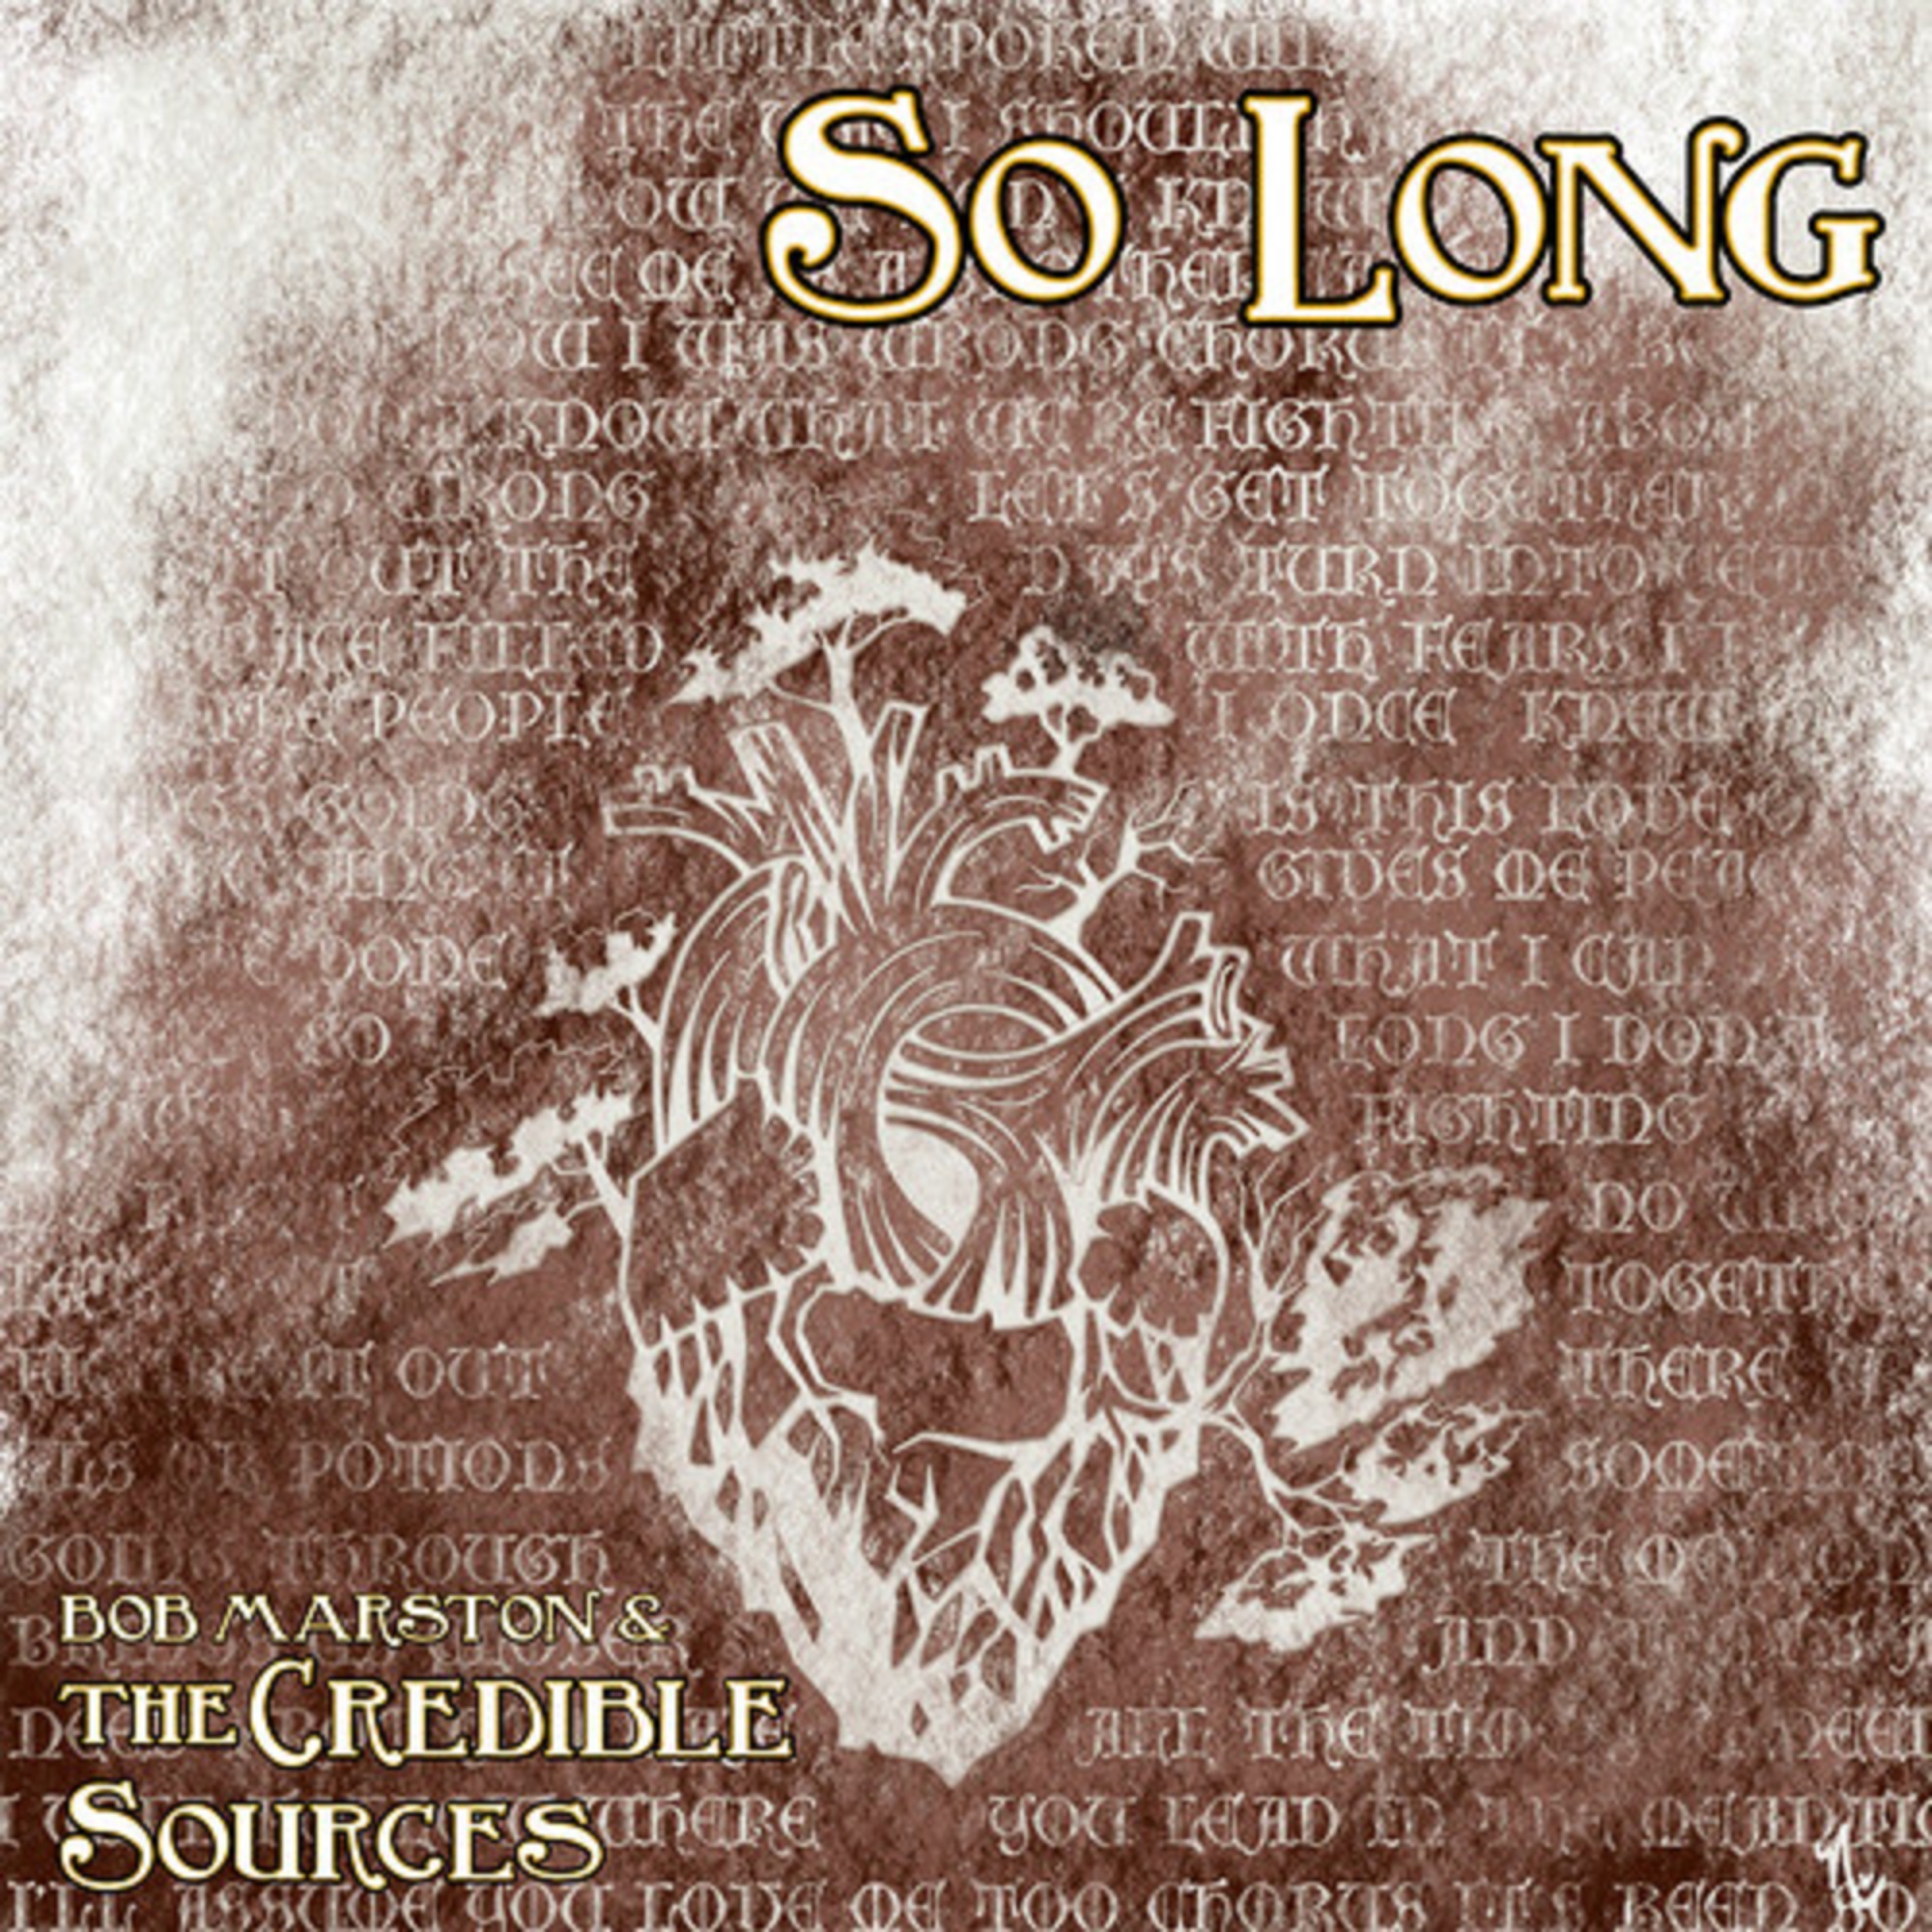 BOB MARSTON & THE CREDIBLE SOURCES' DEBUT LP "SO LONG" + NEW TOUR DATES